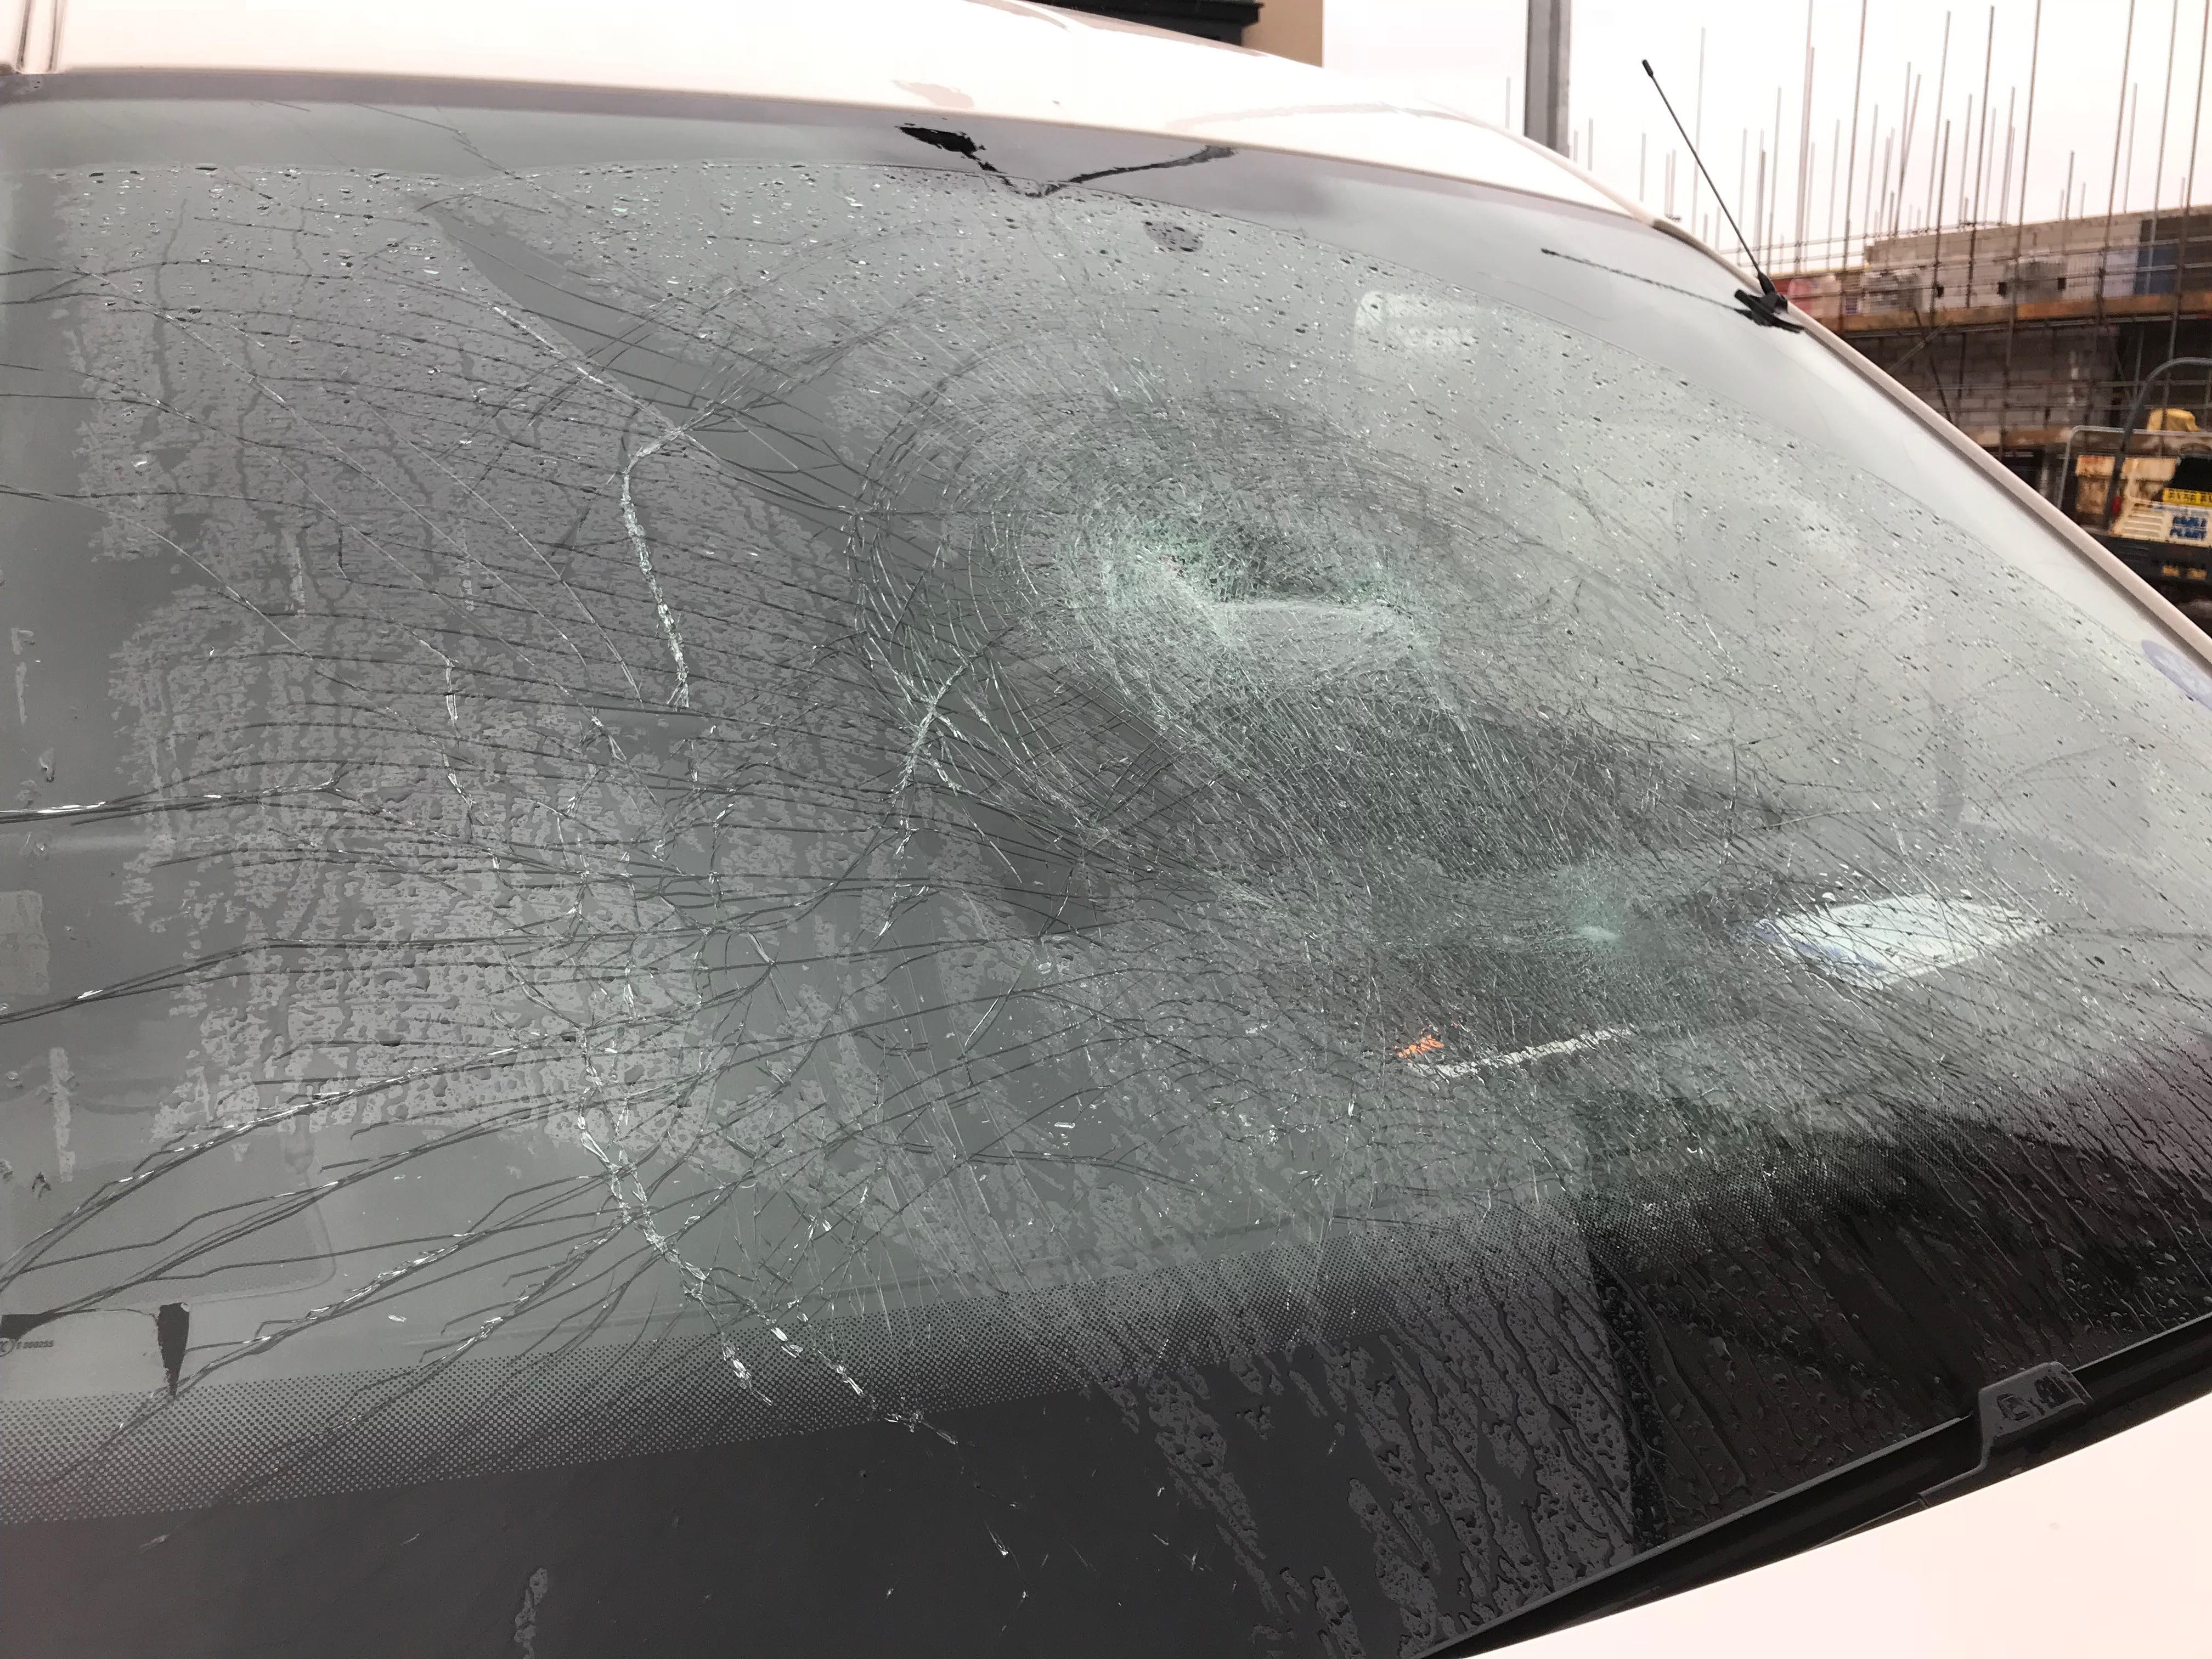 Christine McNeil smashed windscreen